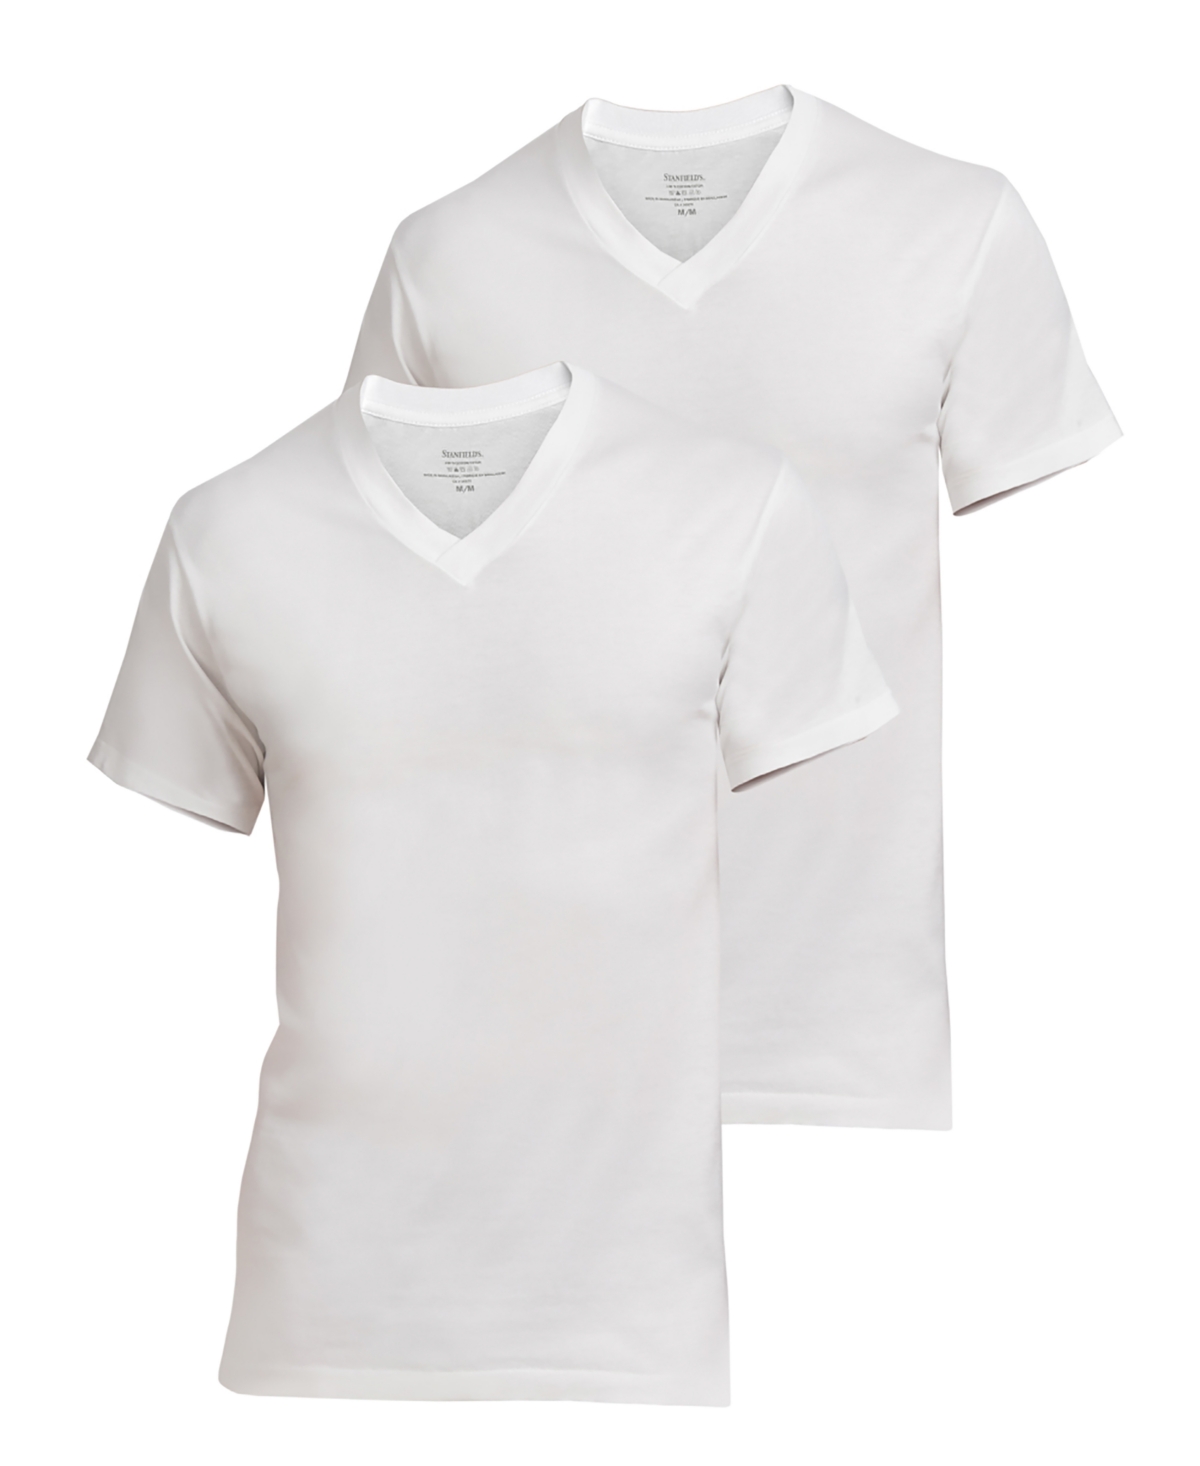 Men's Supreme Cotton Blend V-Neck Undershirts, Pack of 2 - White